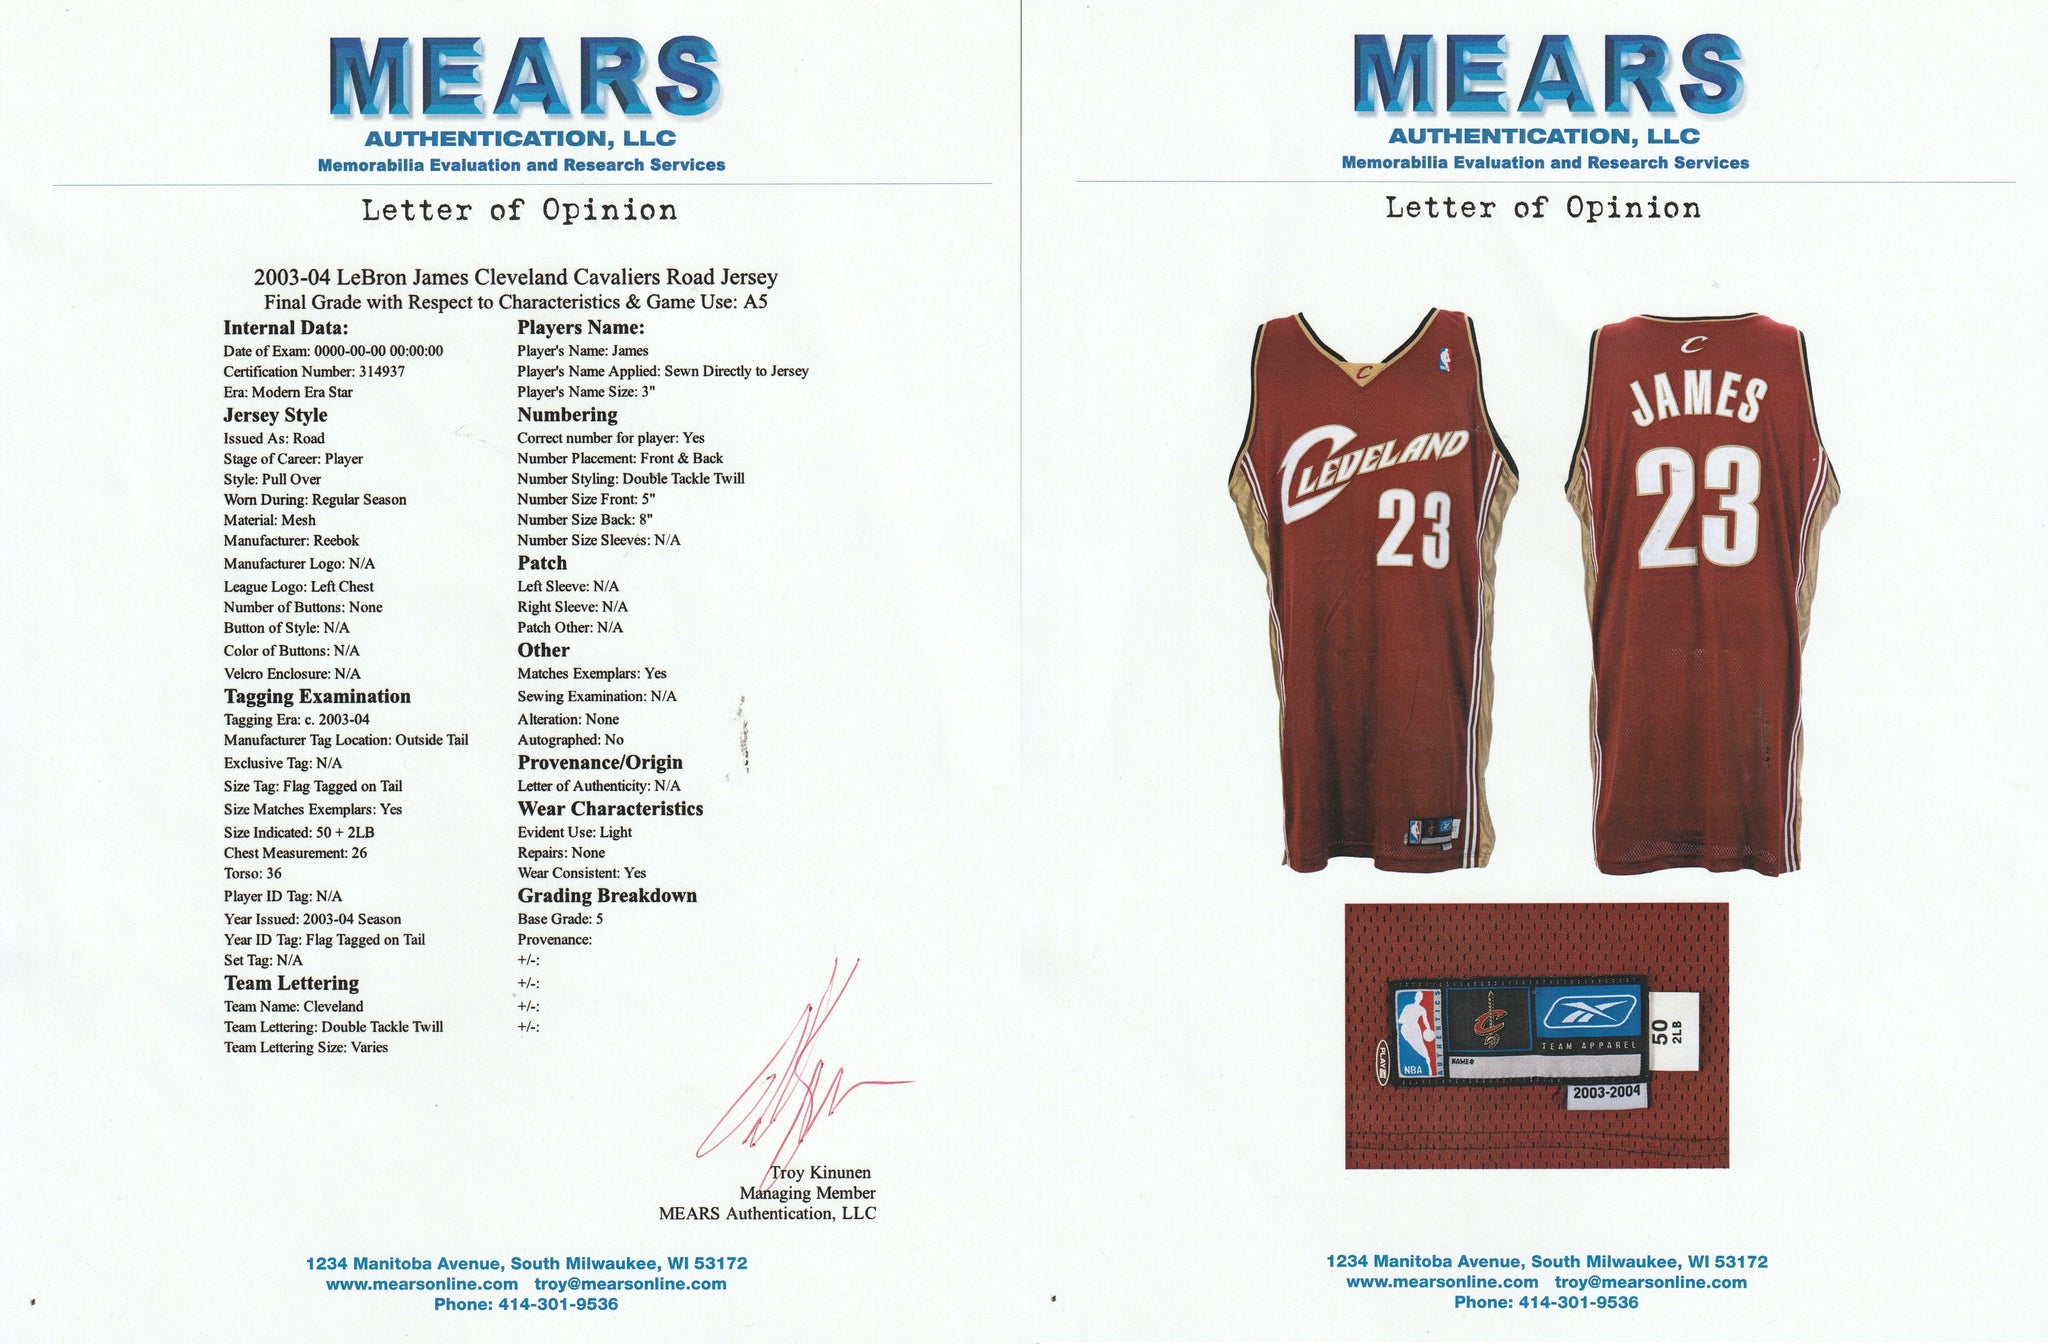 2003- 2004 Lebron James Cleveland Cavaliers Game Worn Jersey